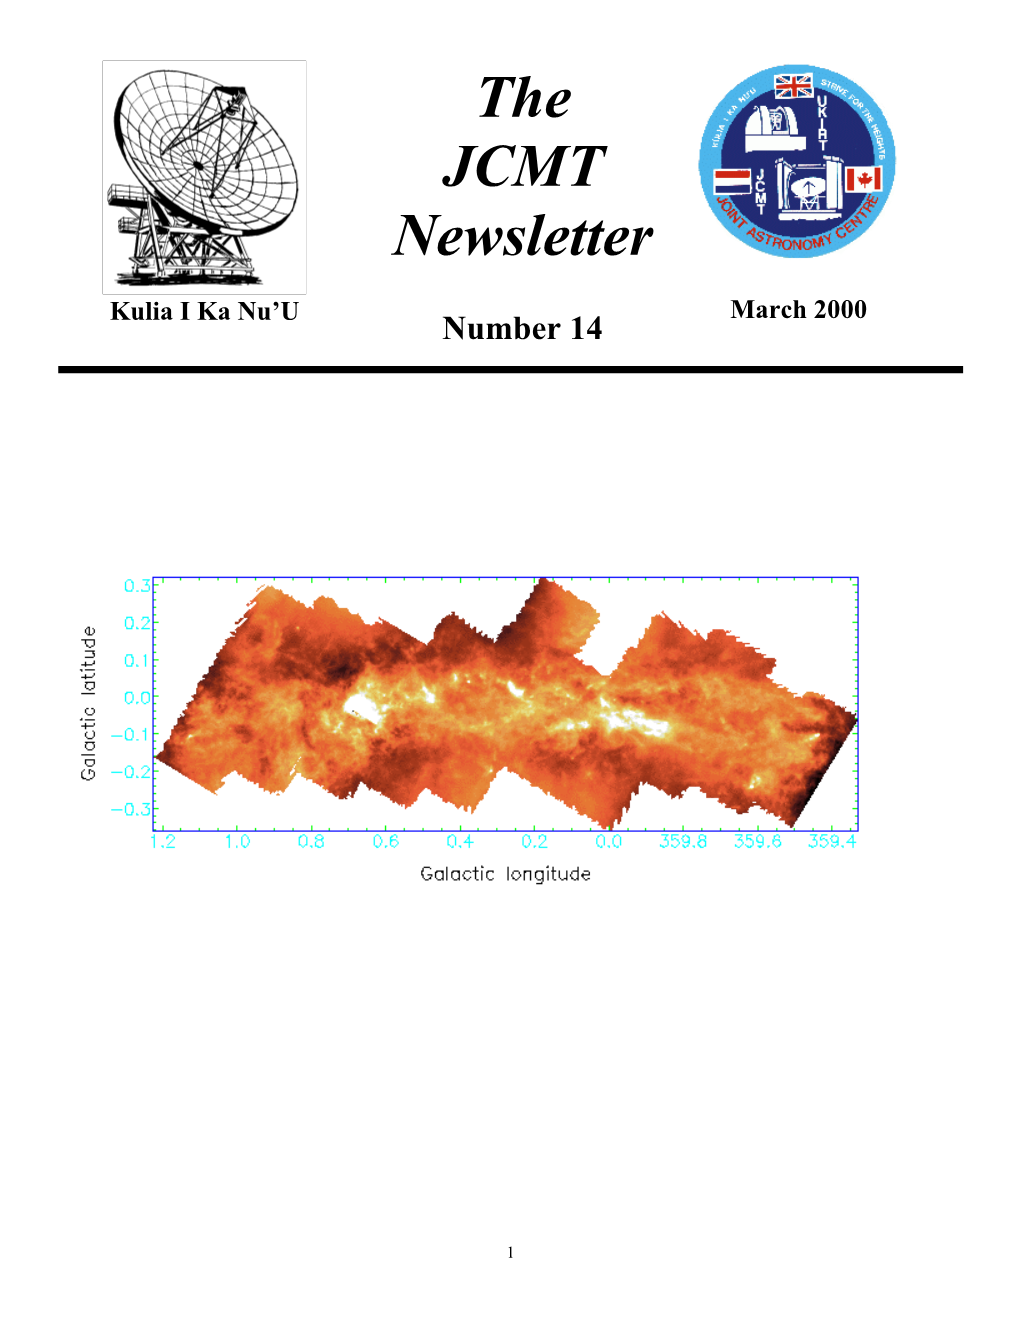 The JCMT Newsletter